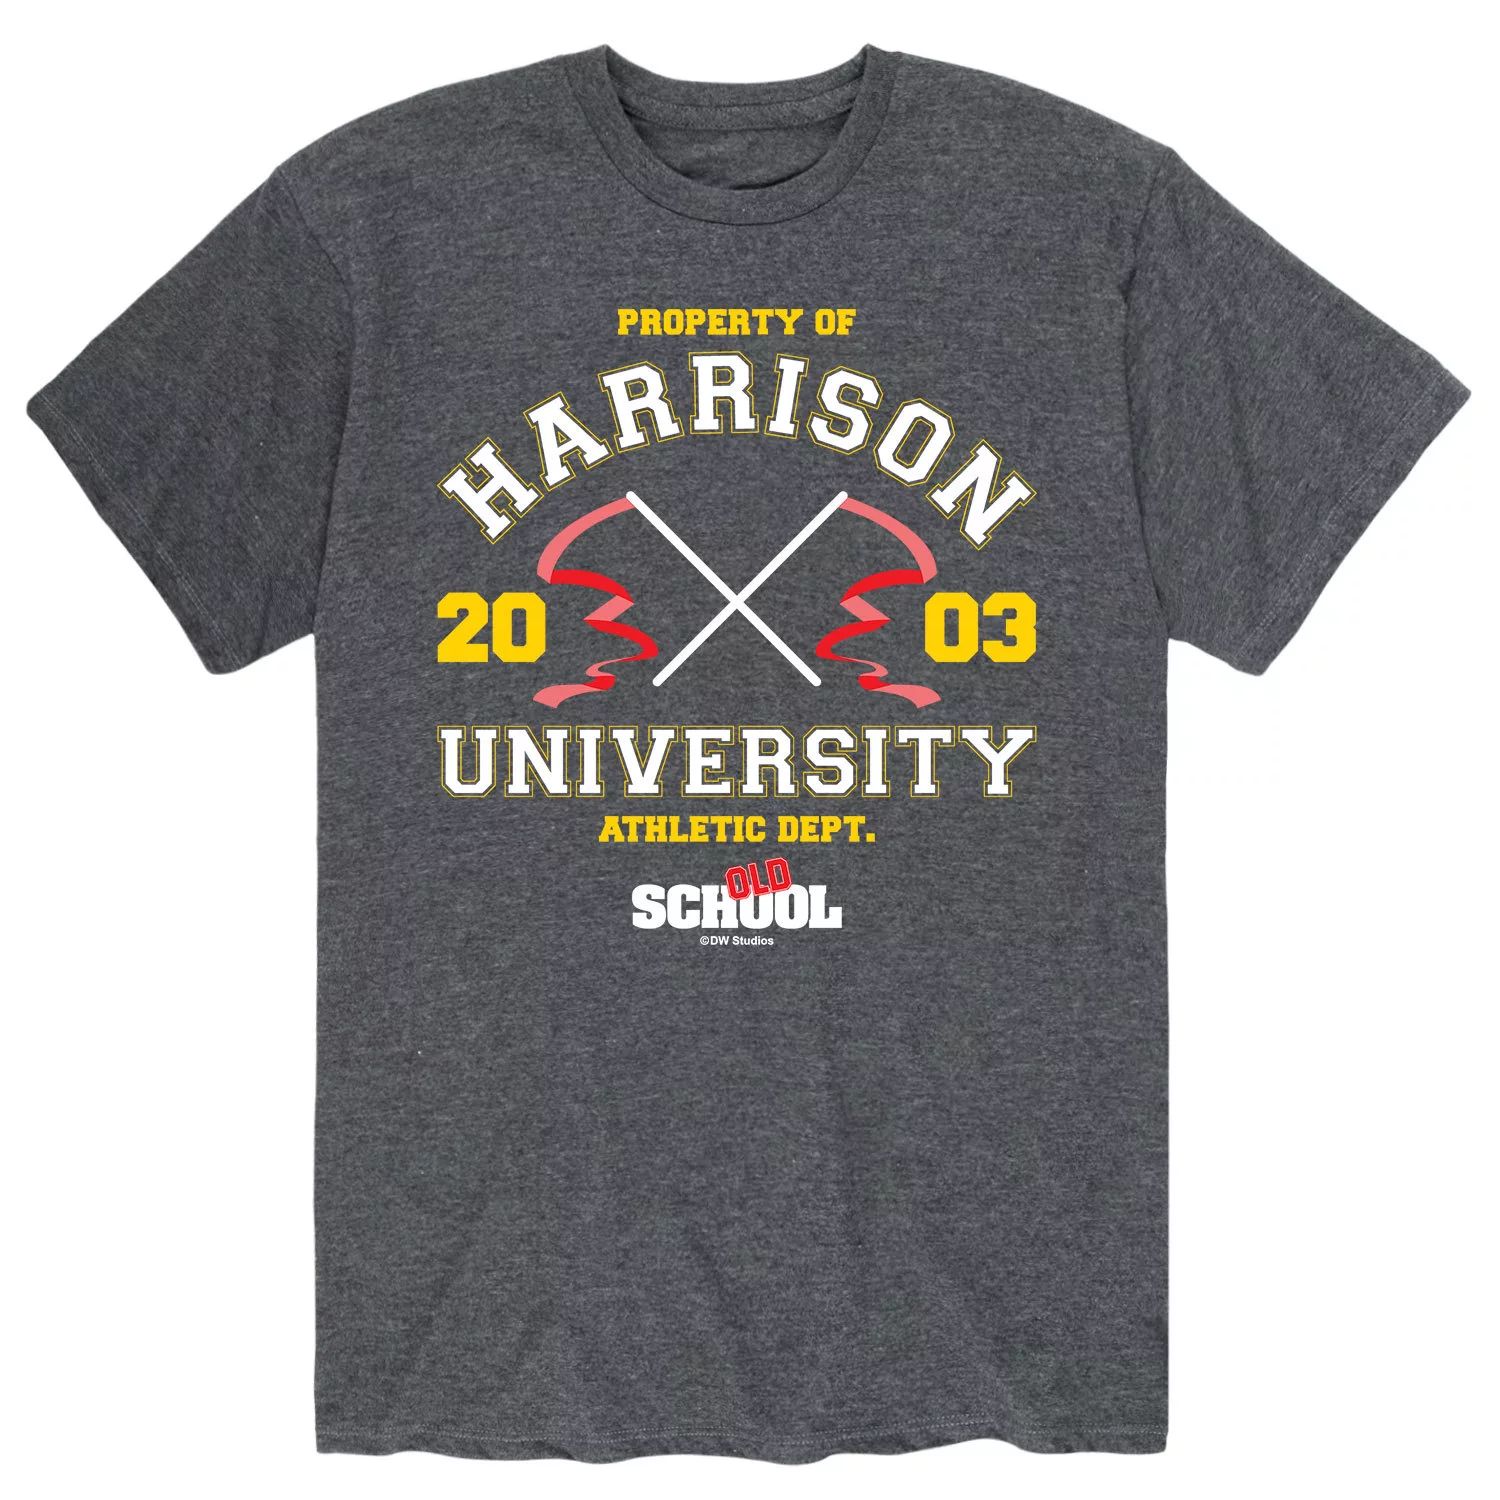 Мужская футболка Old School Harrison Athletic Dept. Licensed Character